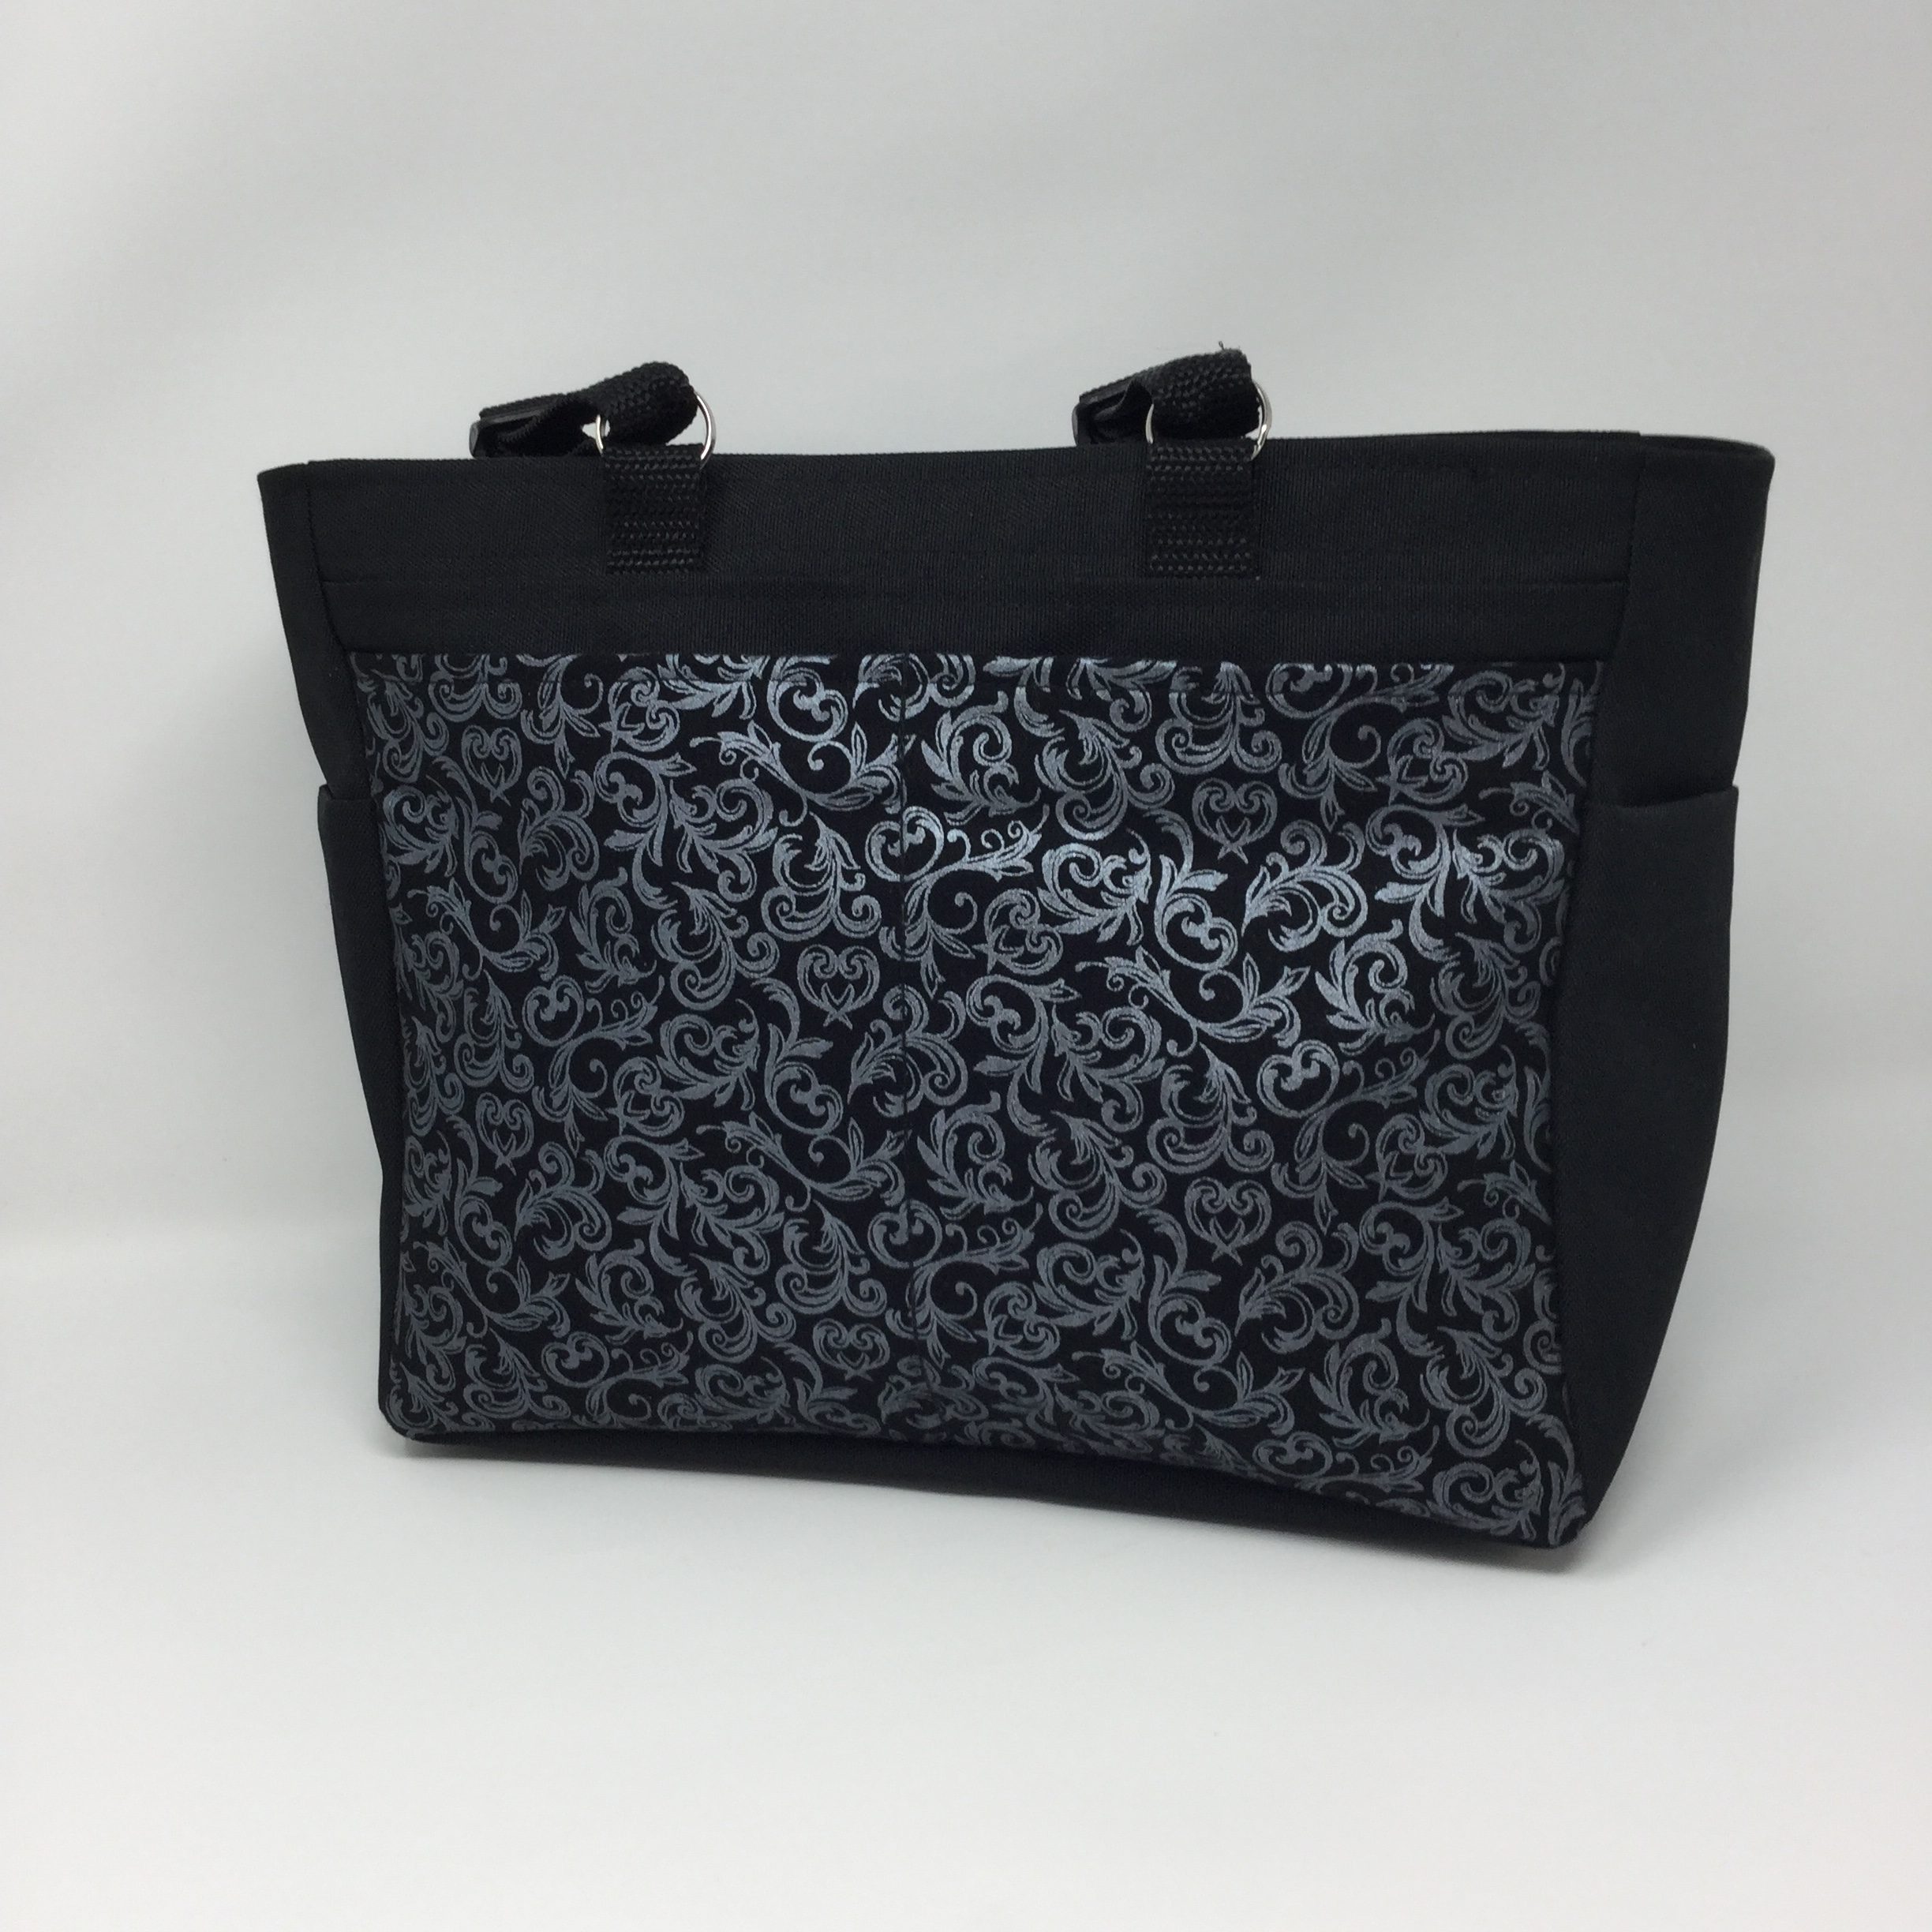 Danny K. Handbags - Handcrafted Tapestry Fabric Handbags & Accessories